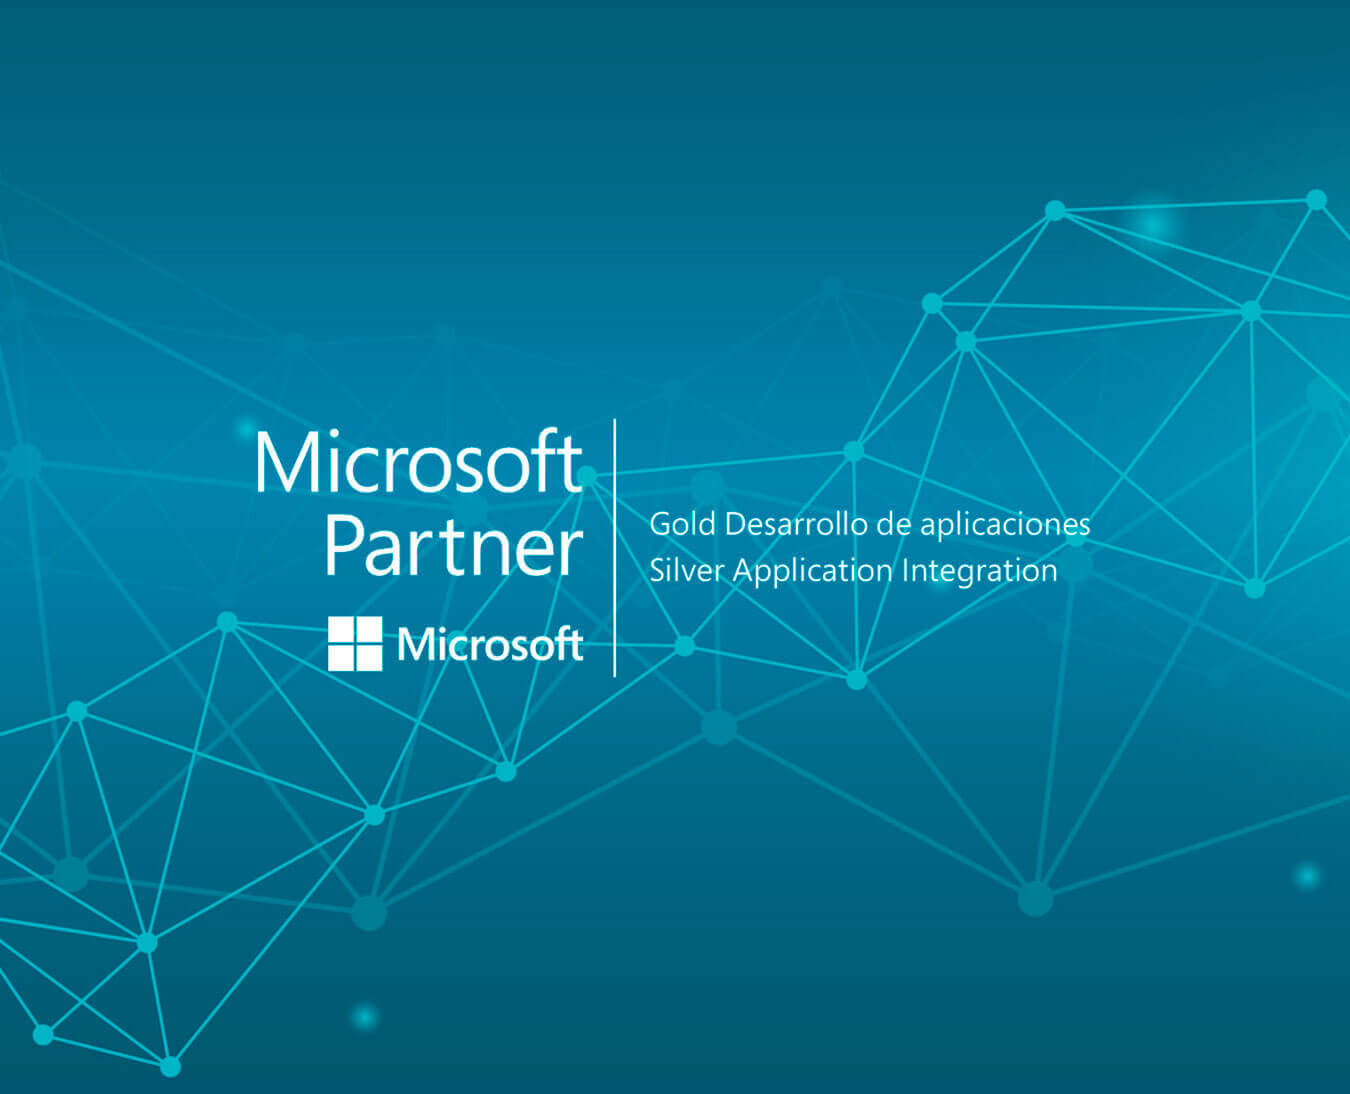 Bisoft - Socios Teccnologicos - Partner de Microsoft